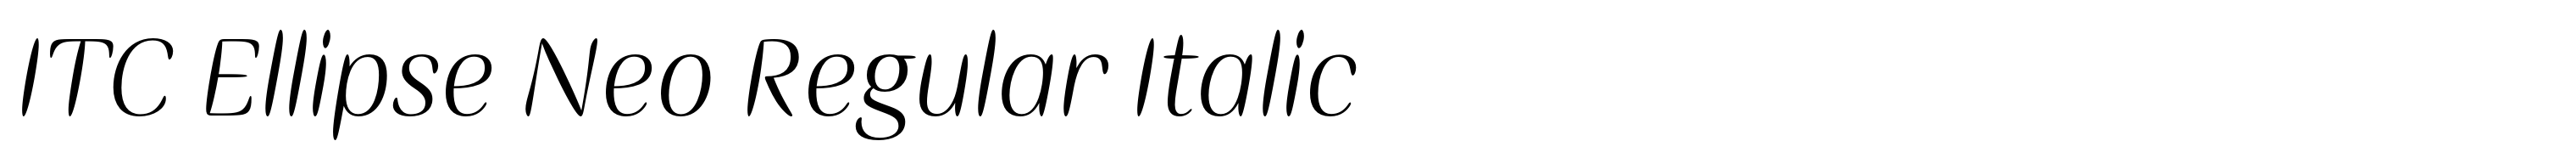 ITC Ellipse Neo Regular Italic